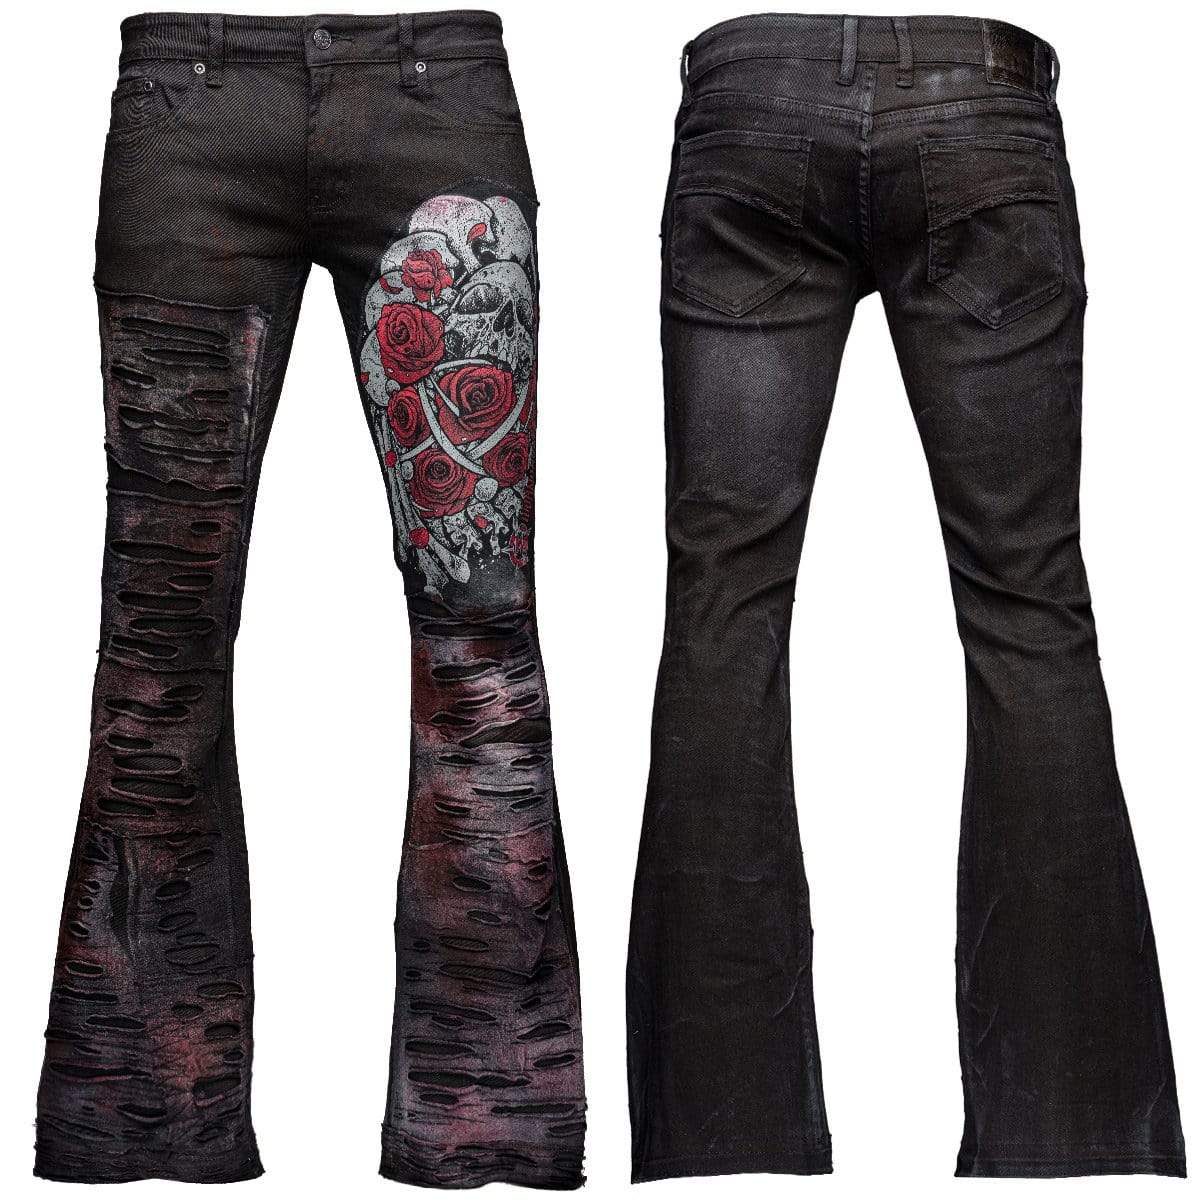 Wornstar Custom Jeans - Chained